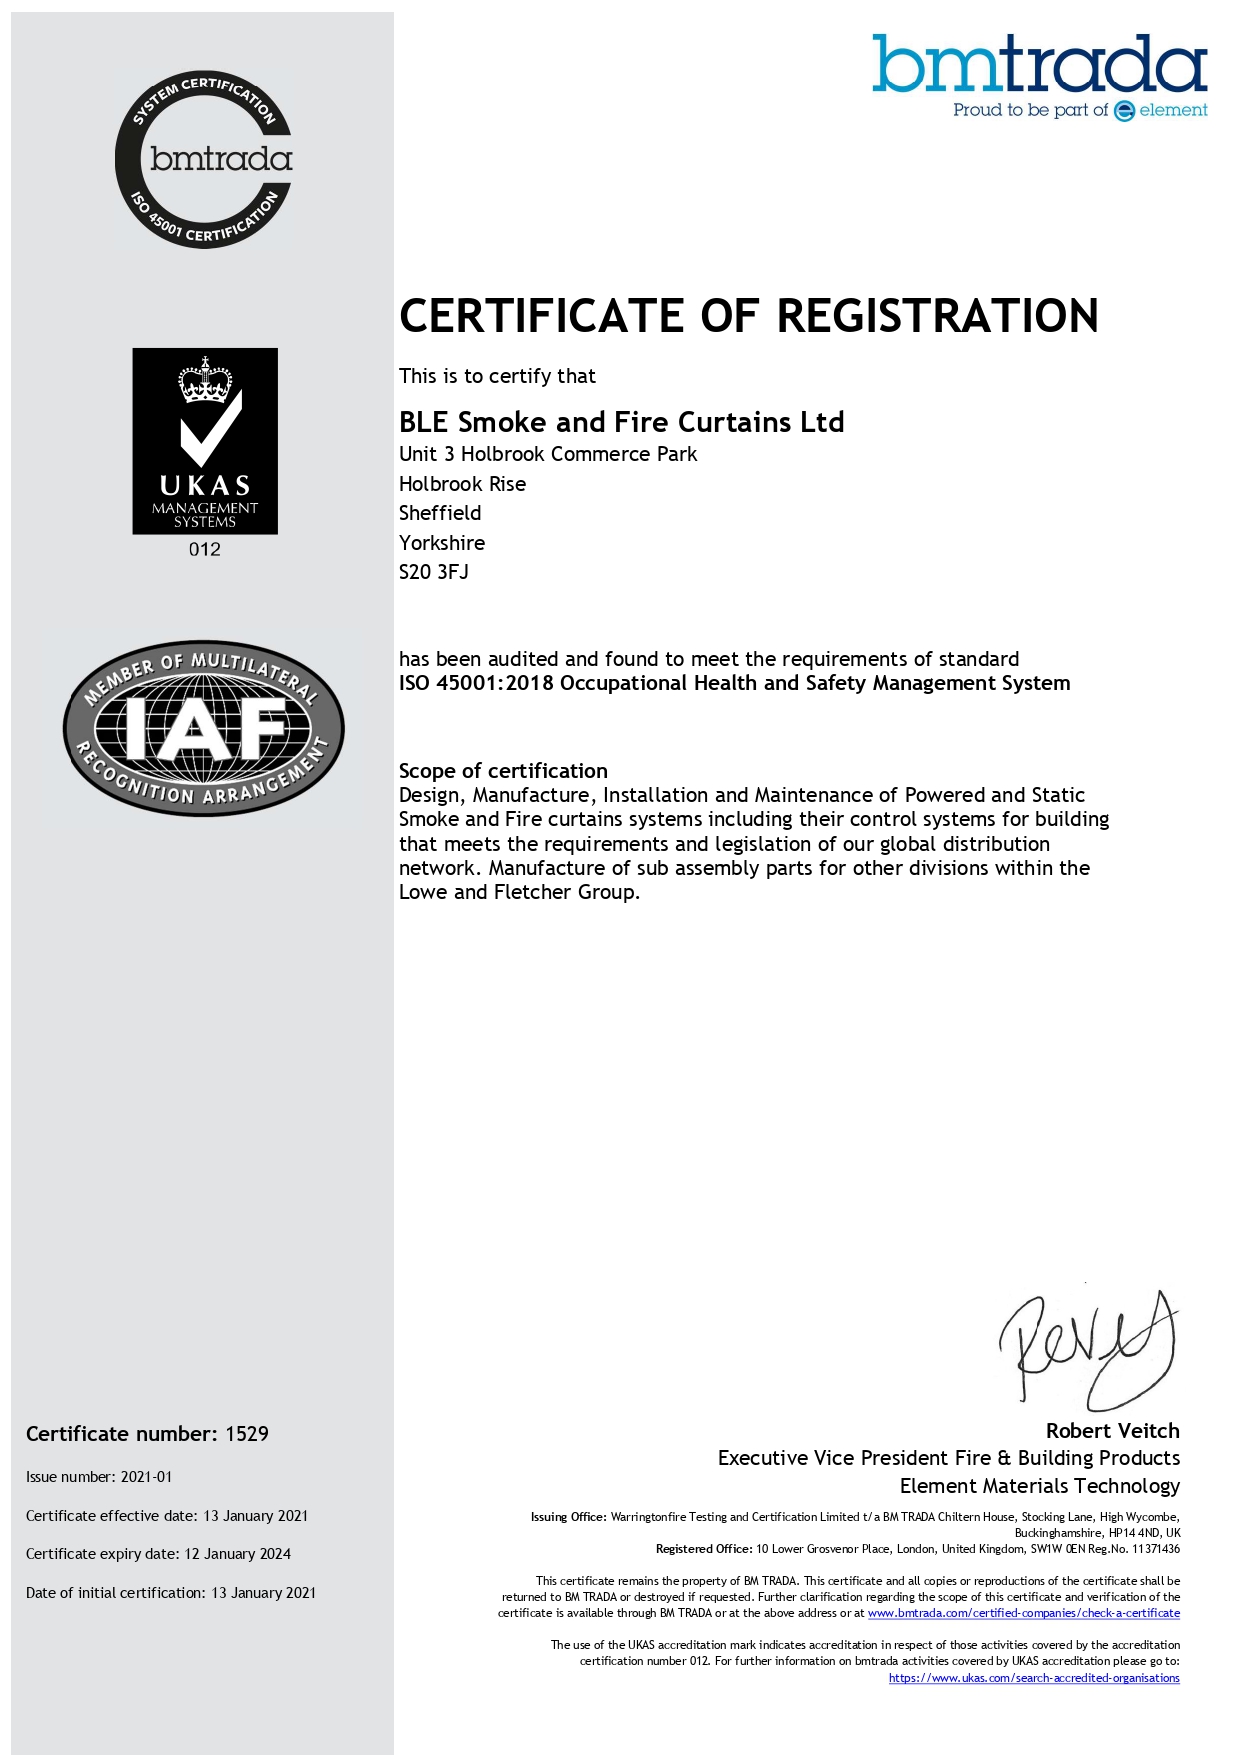 ISO 45001-2018 QHSMS Certificate.jpg